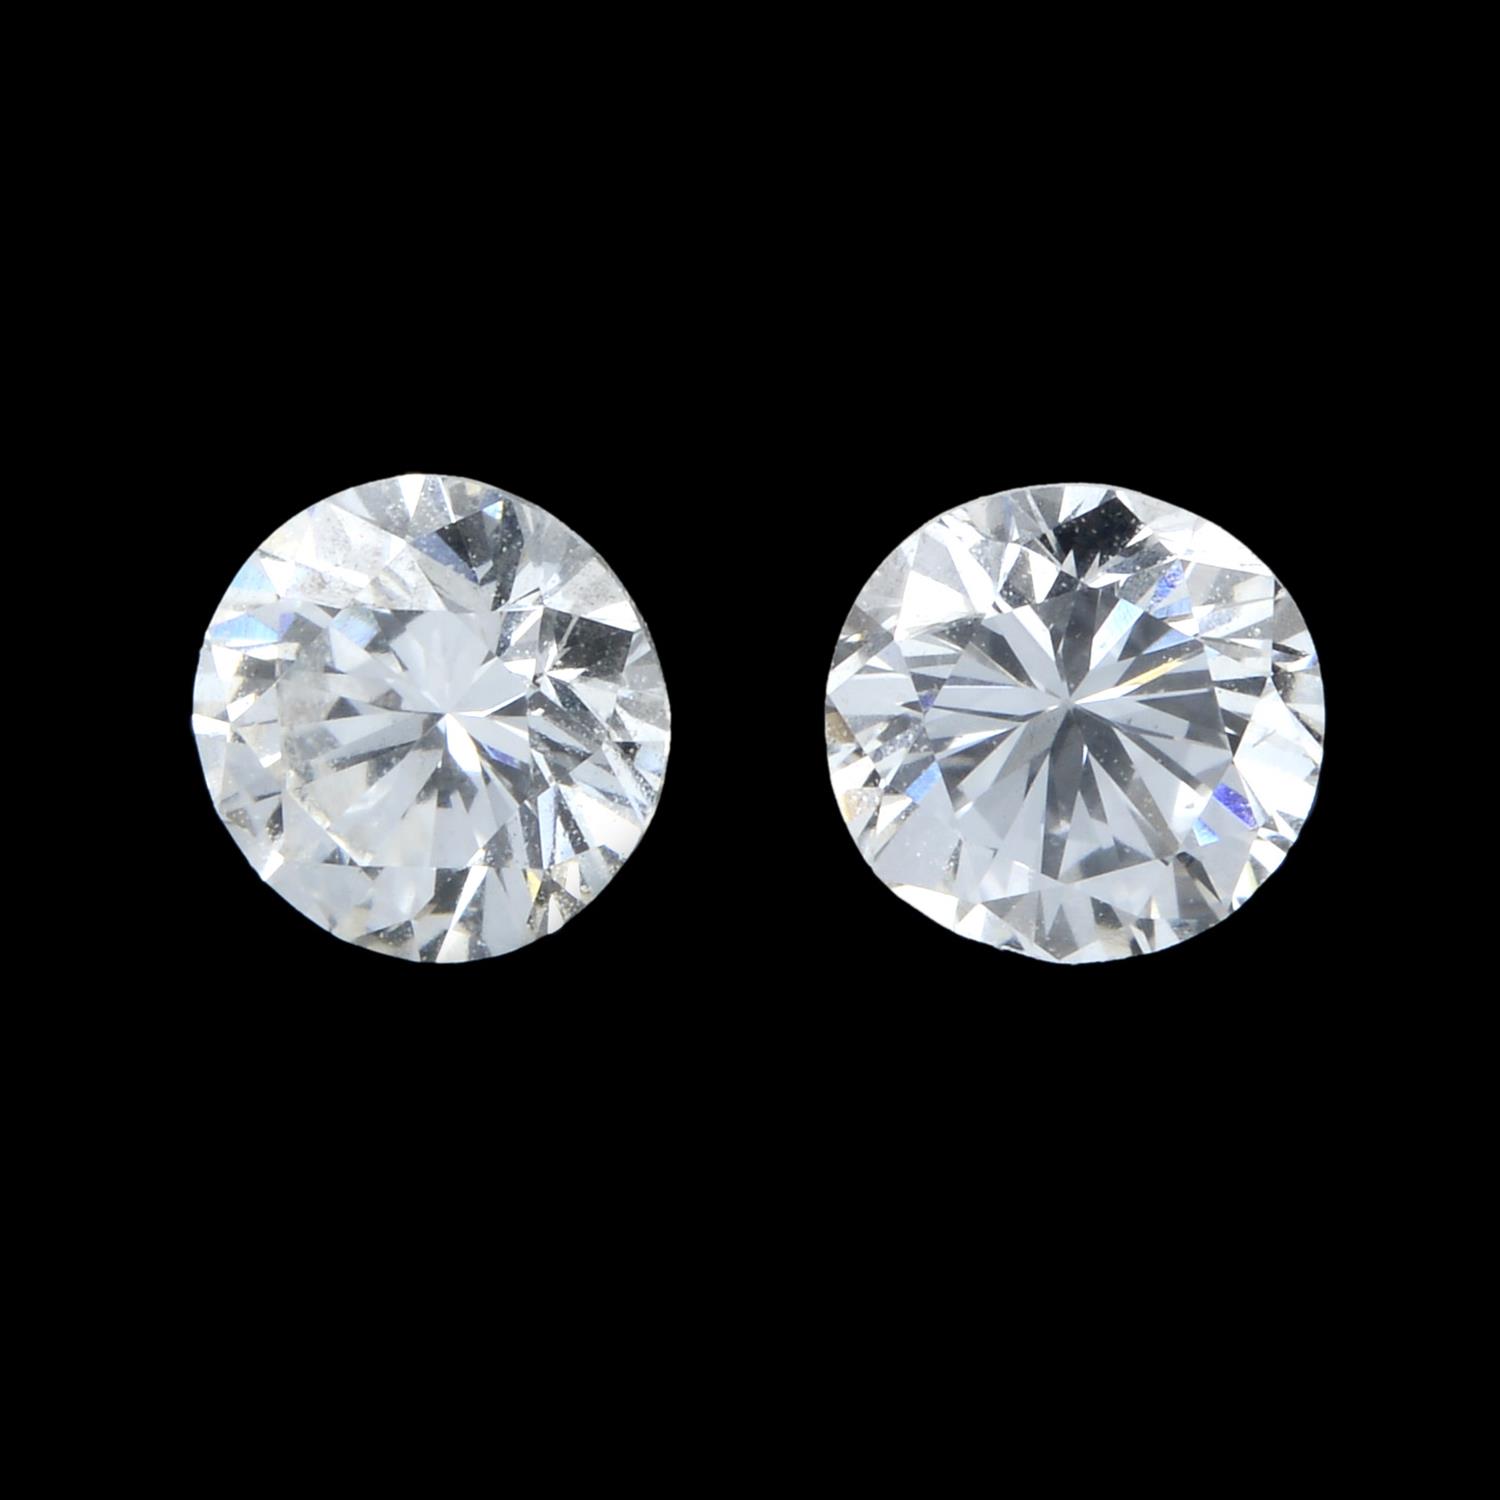 Pair of brilliant cut diamonds weighing 0.56ct